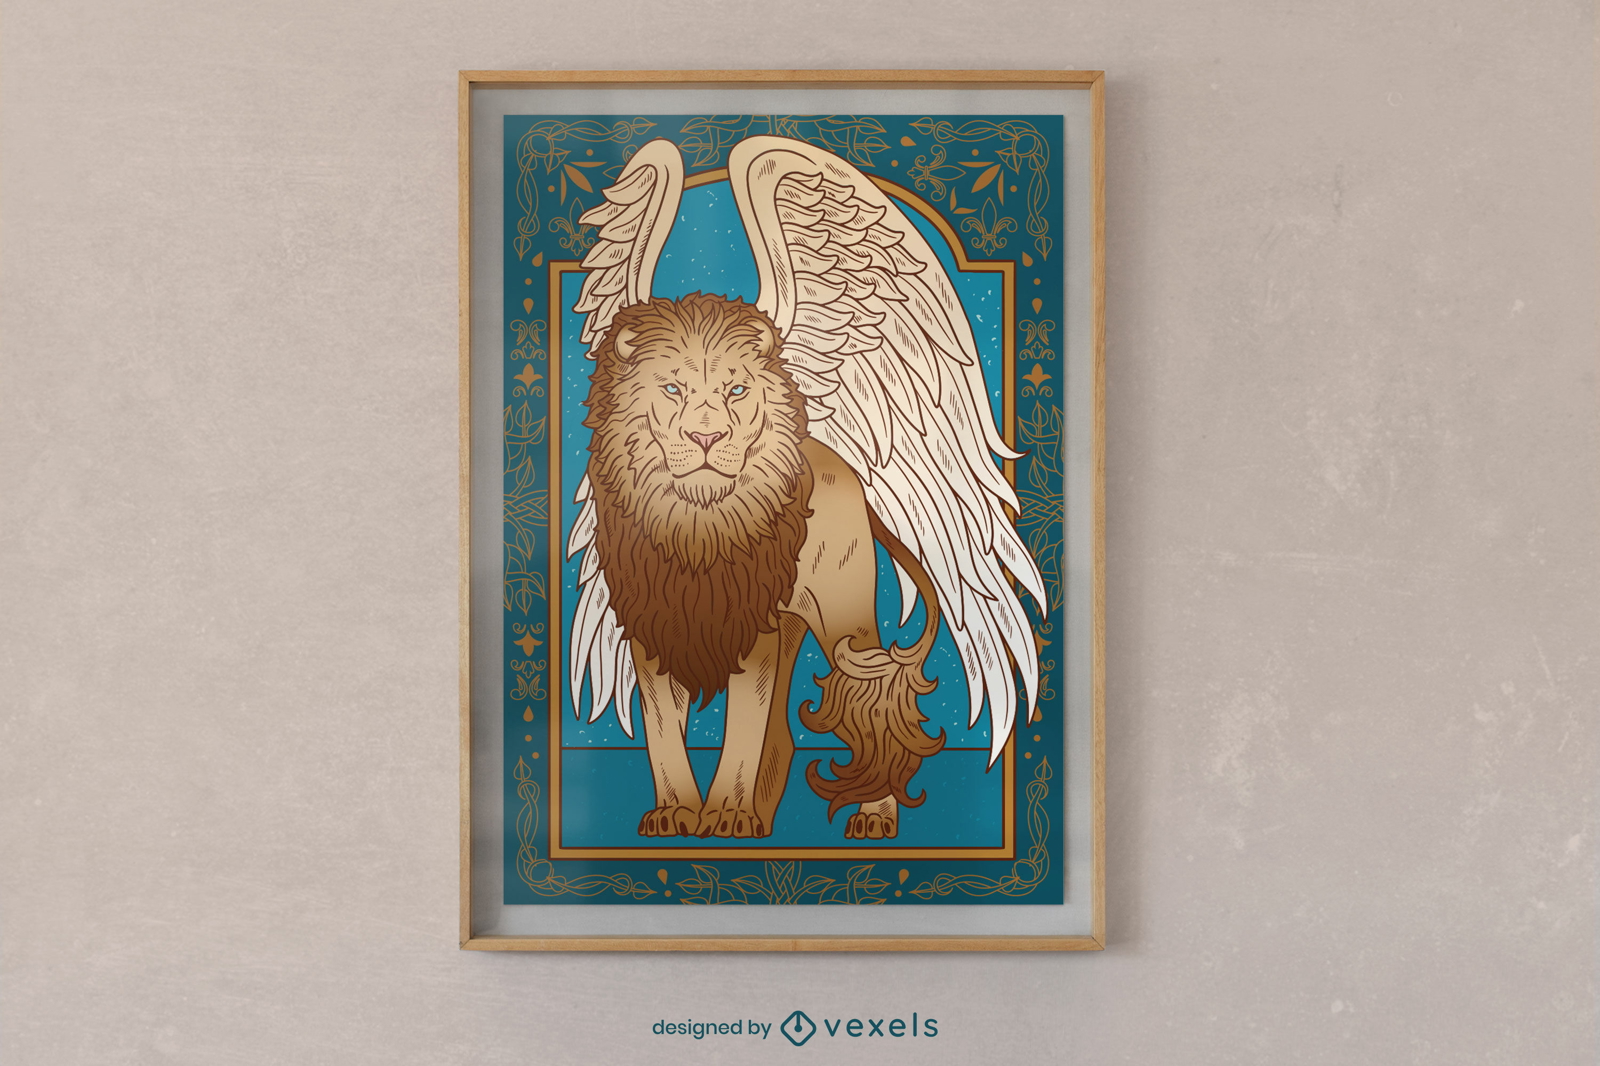 Animal le?o com design de cartaz de asas de anjo